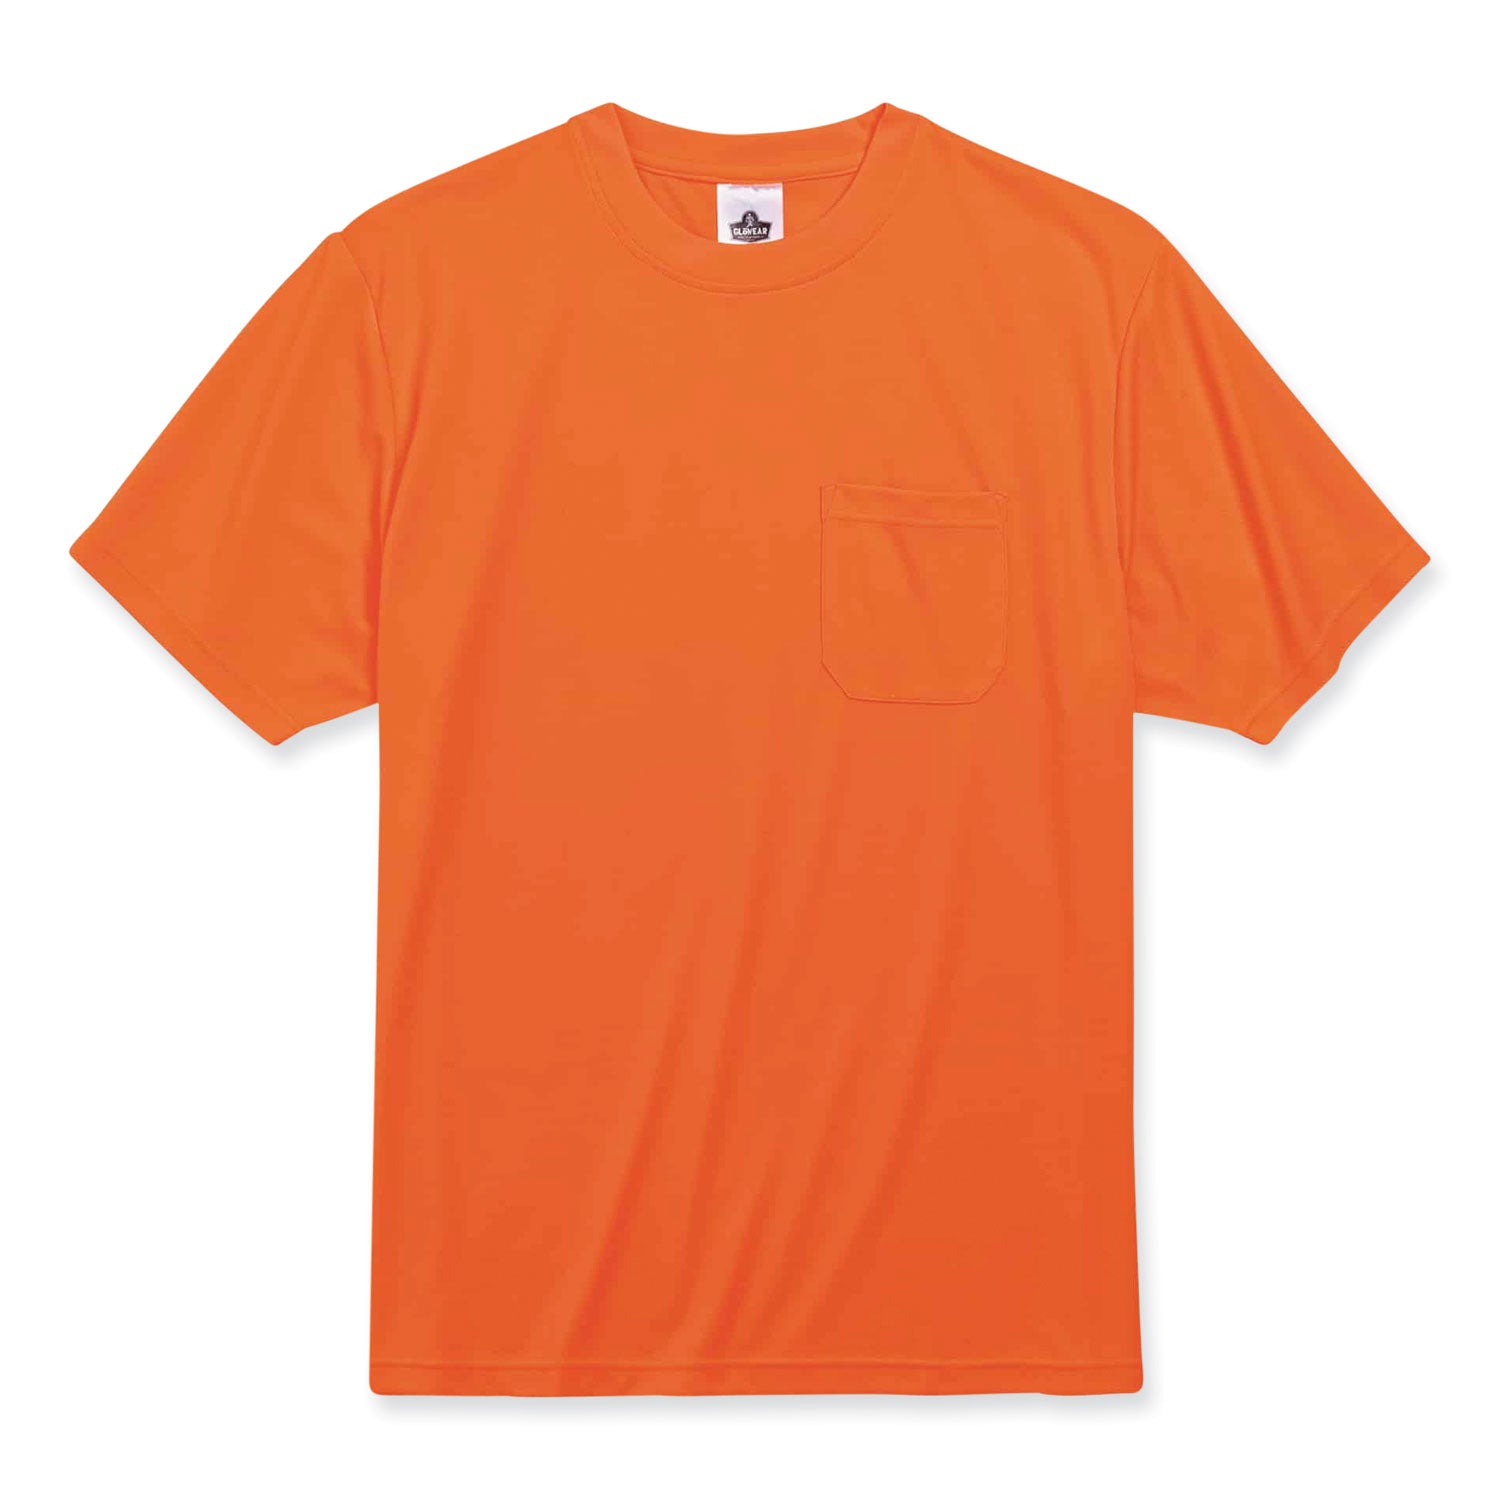 glowear-8089-non-certified-hi-vis-t-shirt-polyester-3x-large-orange-ships-in-1-3-business-days_ego21567 - 1